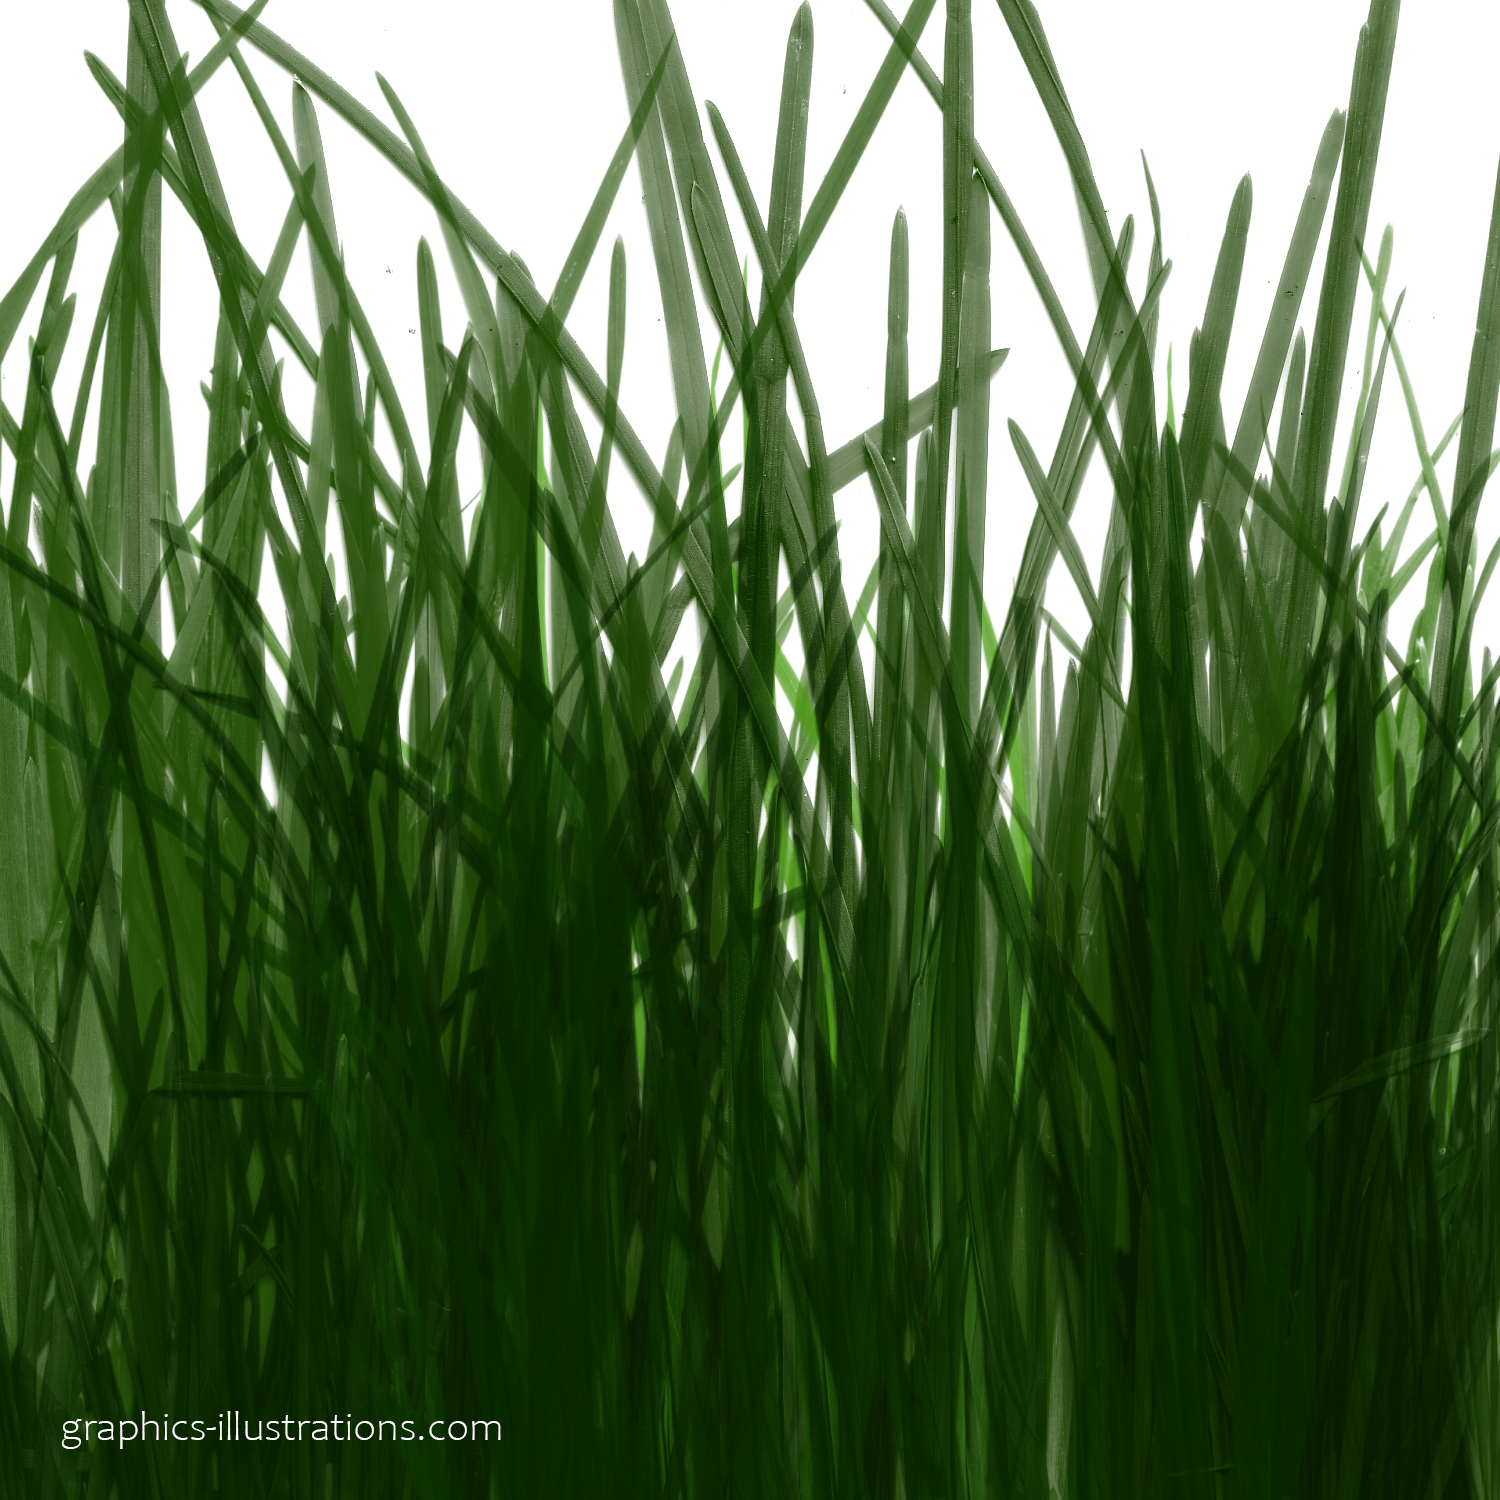 Grass Photoshop Brushes